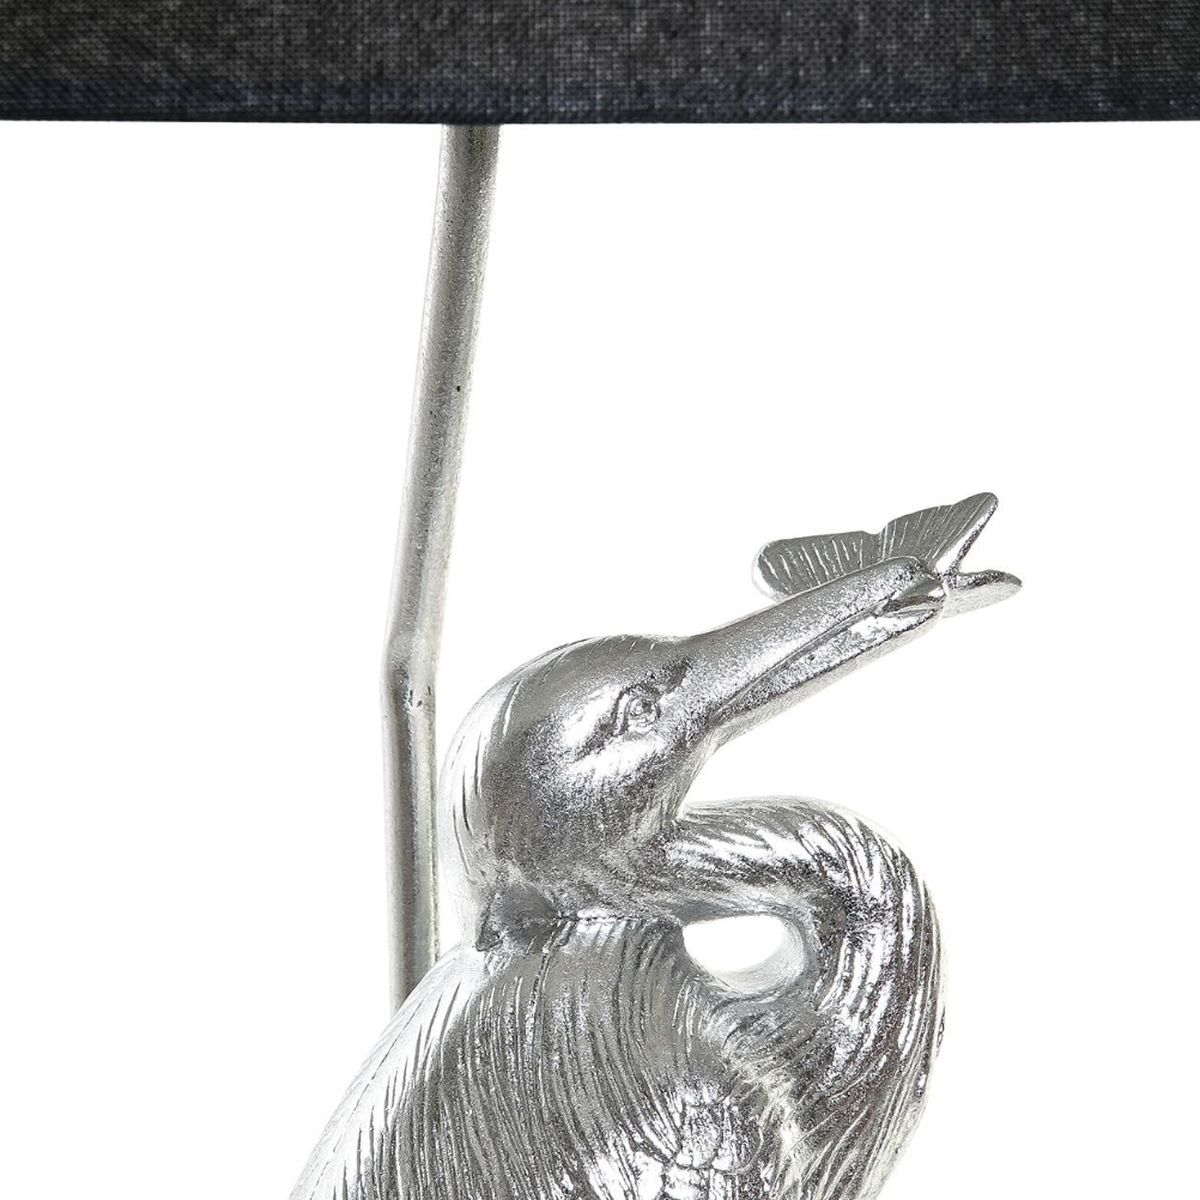 Heron lamp in resin 74 cm